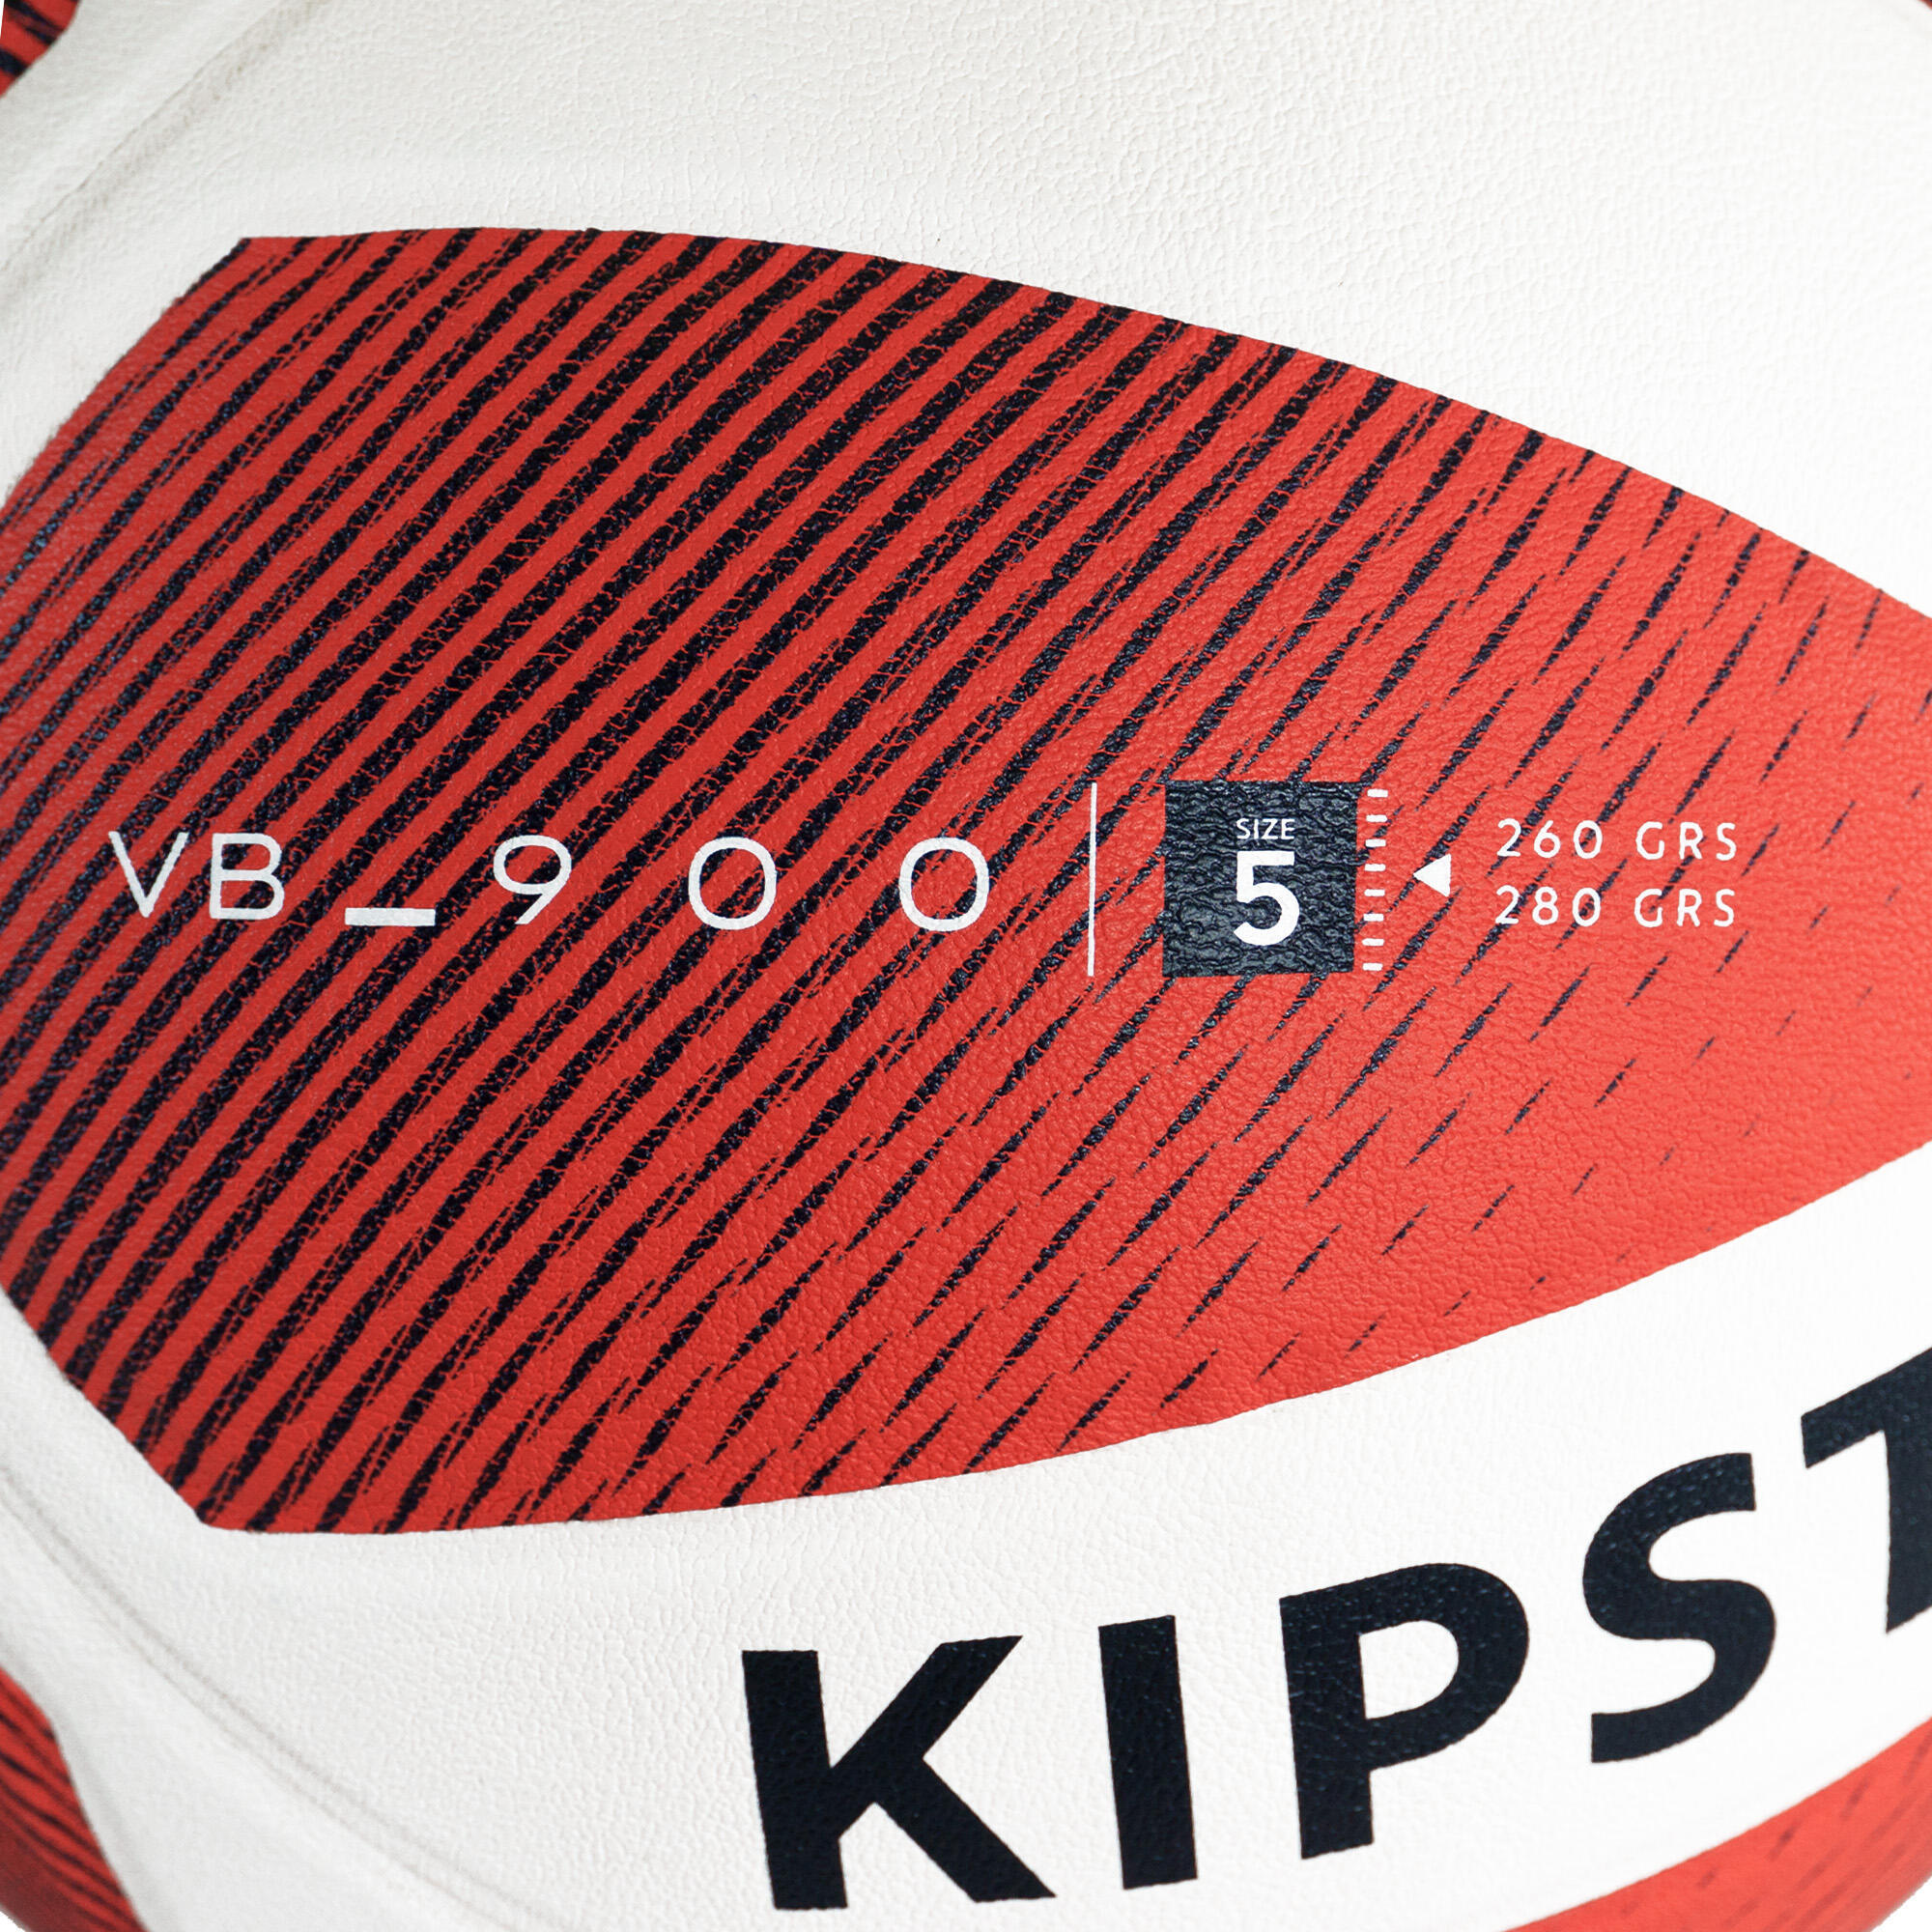 Volleyball V900 - White/Red 3/6